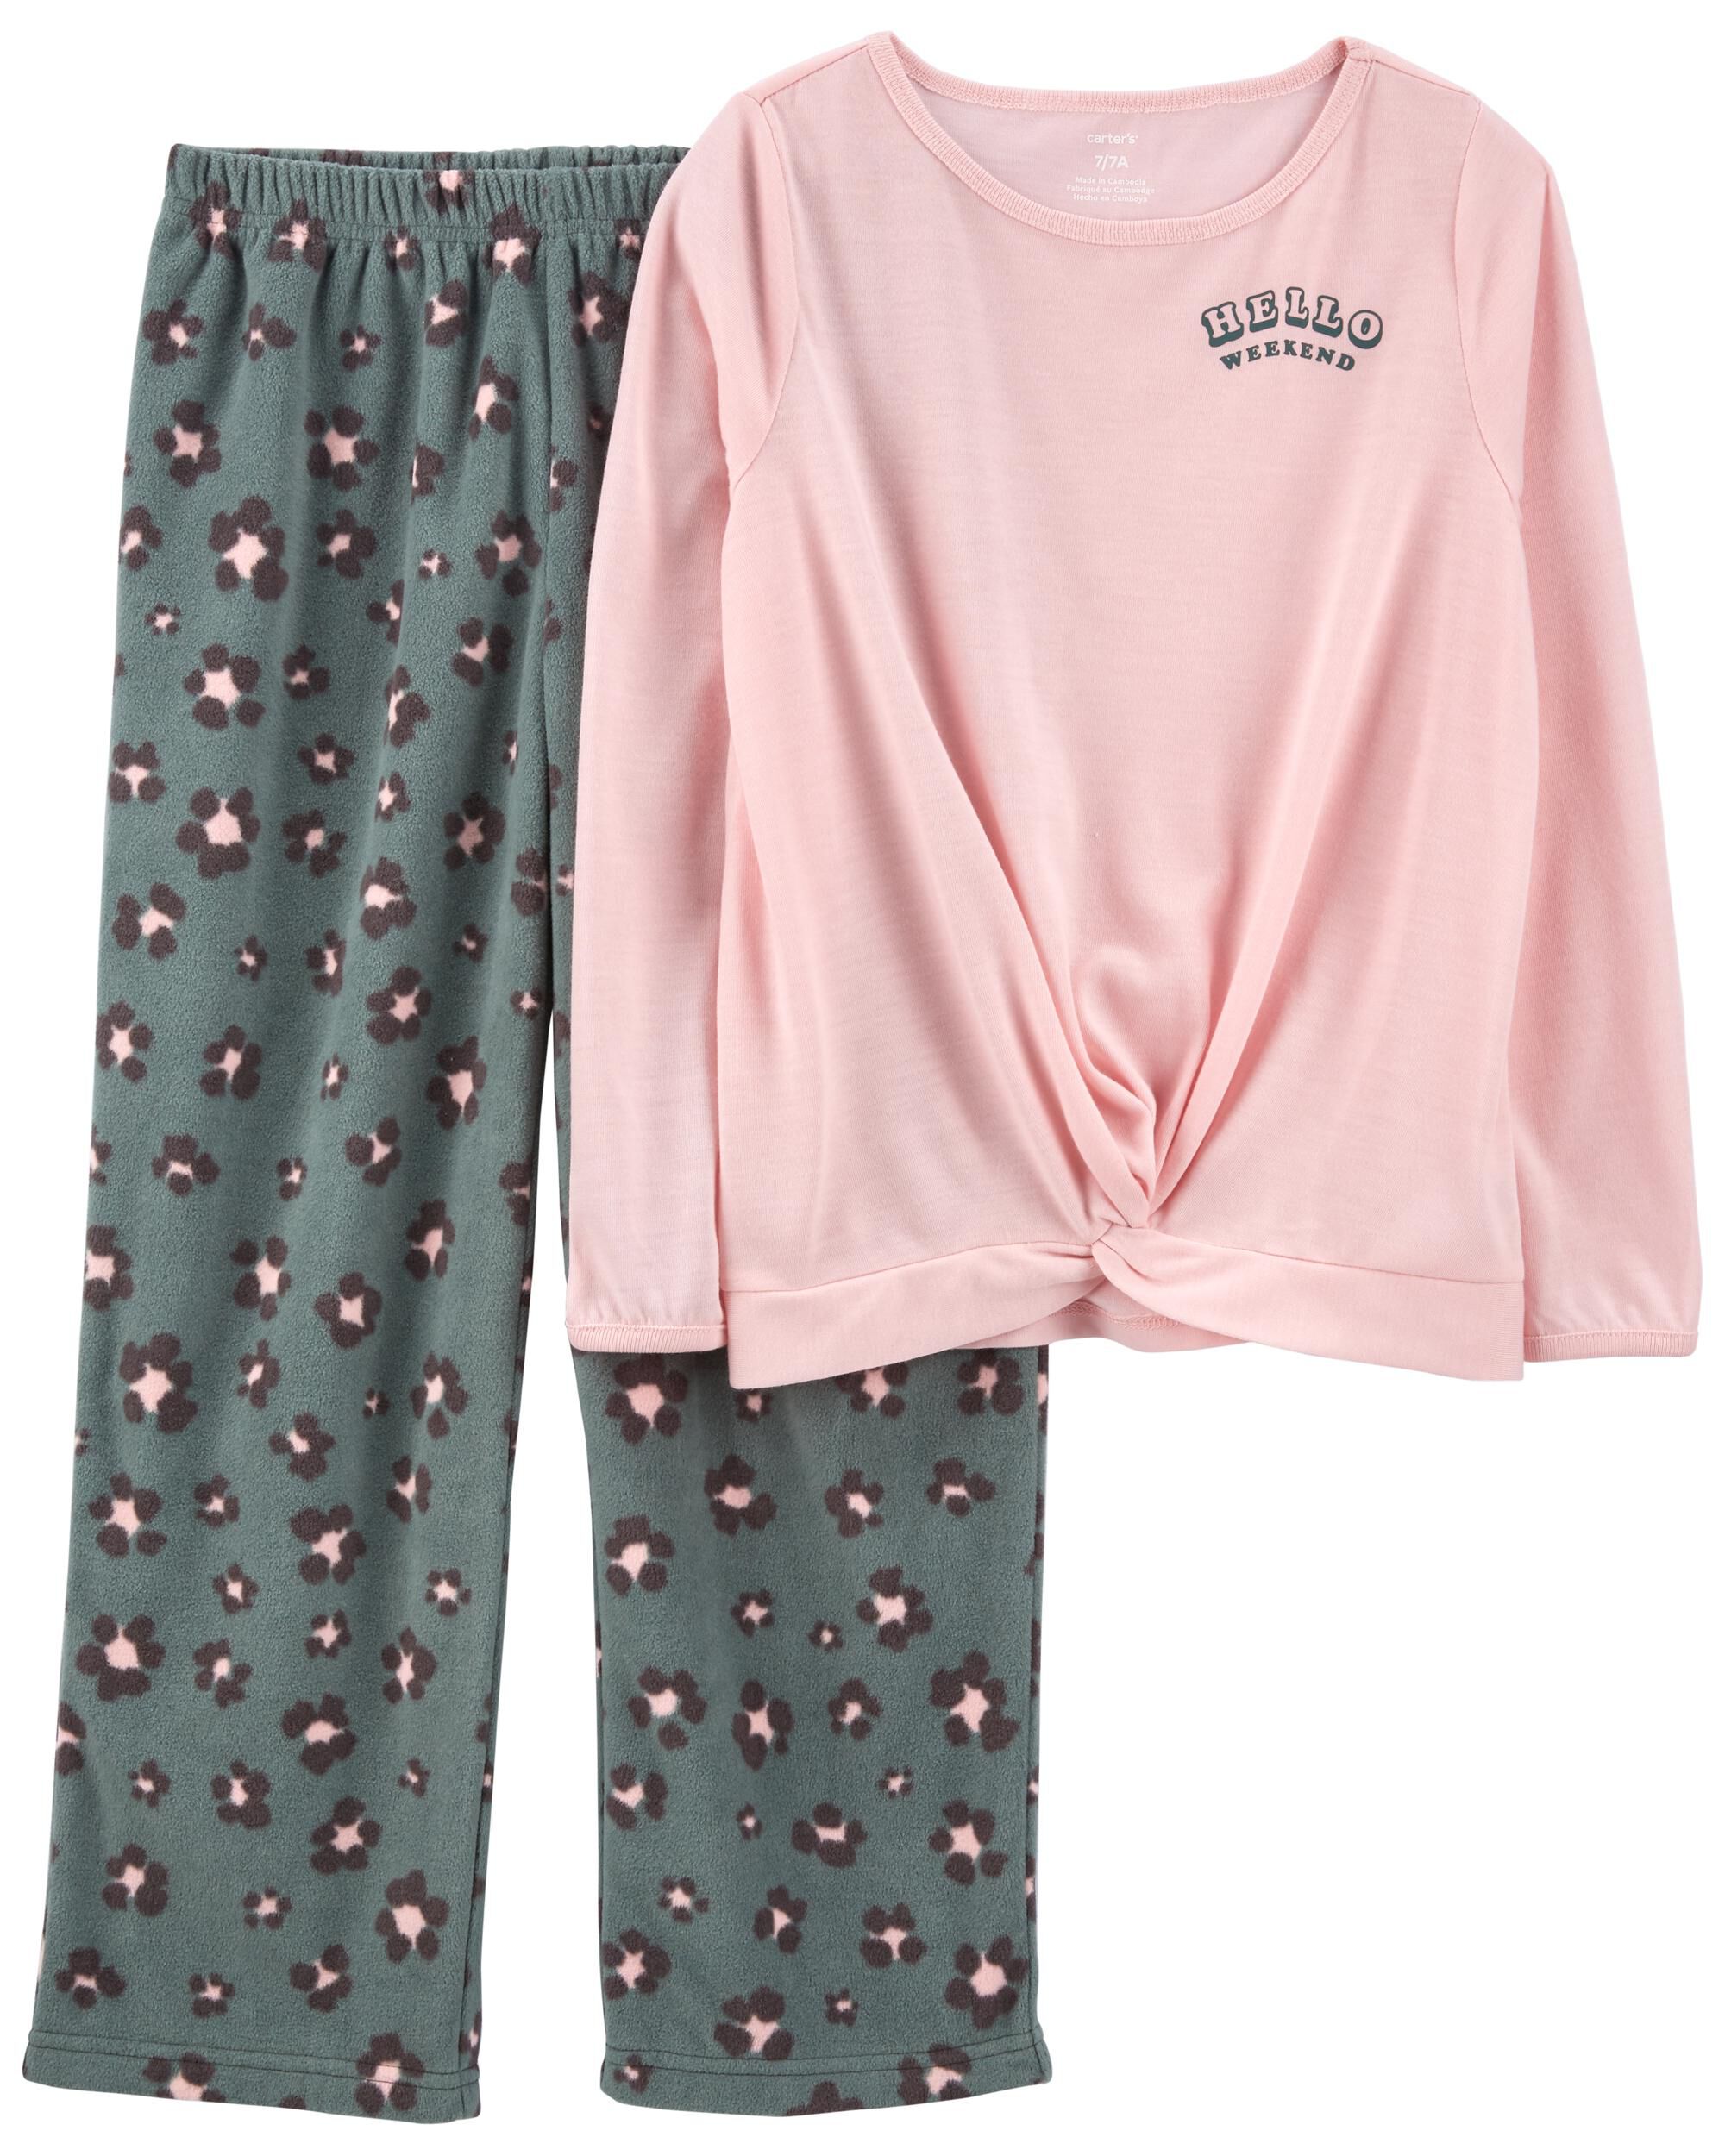 Kleding Meisjeskleding Pyjamas & Badjassen Pyjama Set of 2 Girls’ Pajamas Carter’s and Fisher-Price 